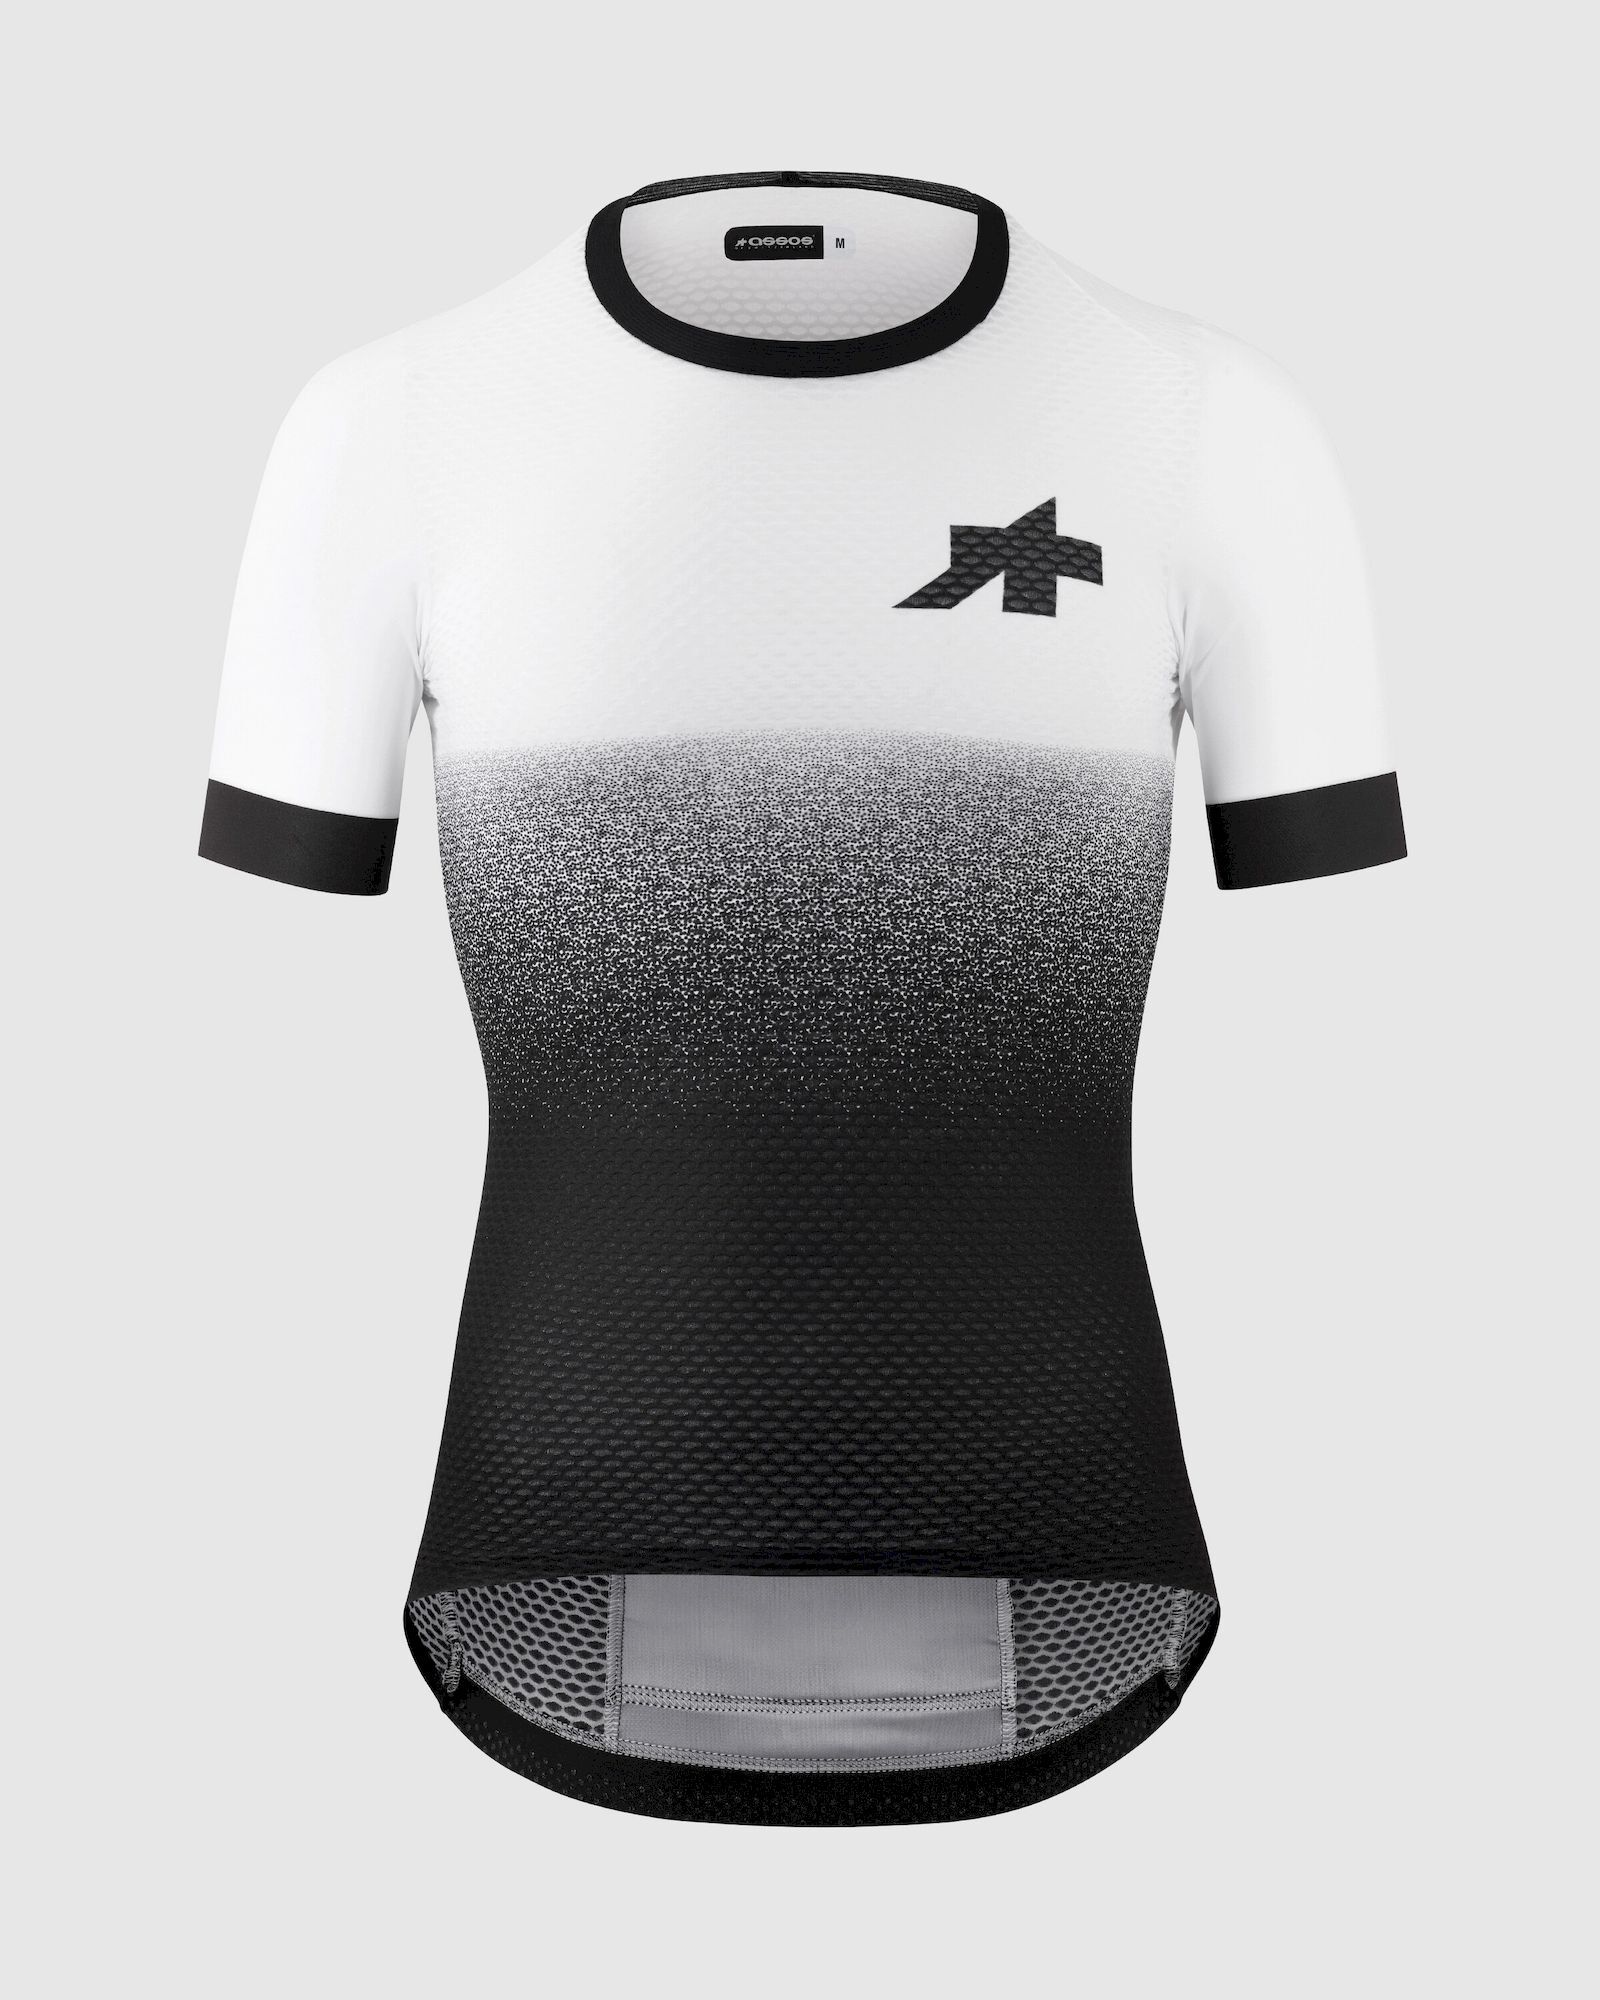 Assos Equipe RSR Jersey Superleger S9 - Cycling jersey - Men's | Hardloop